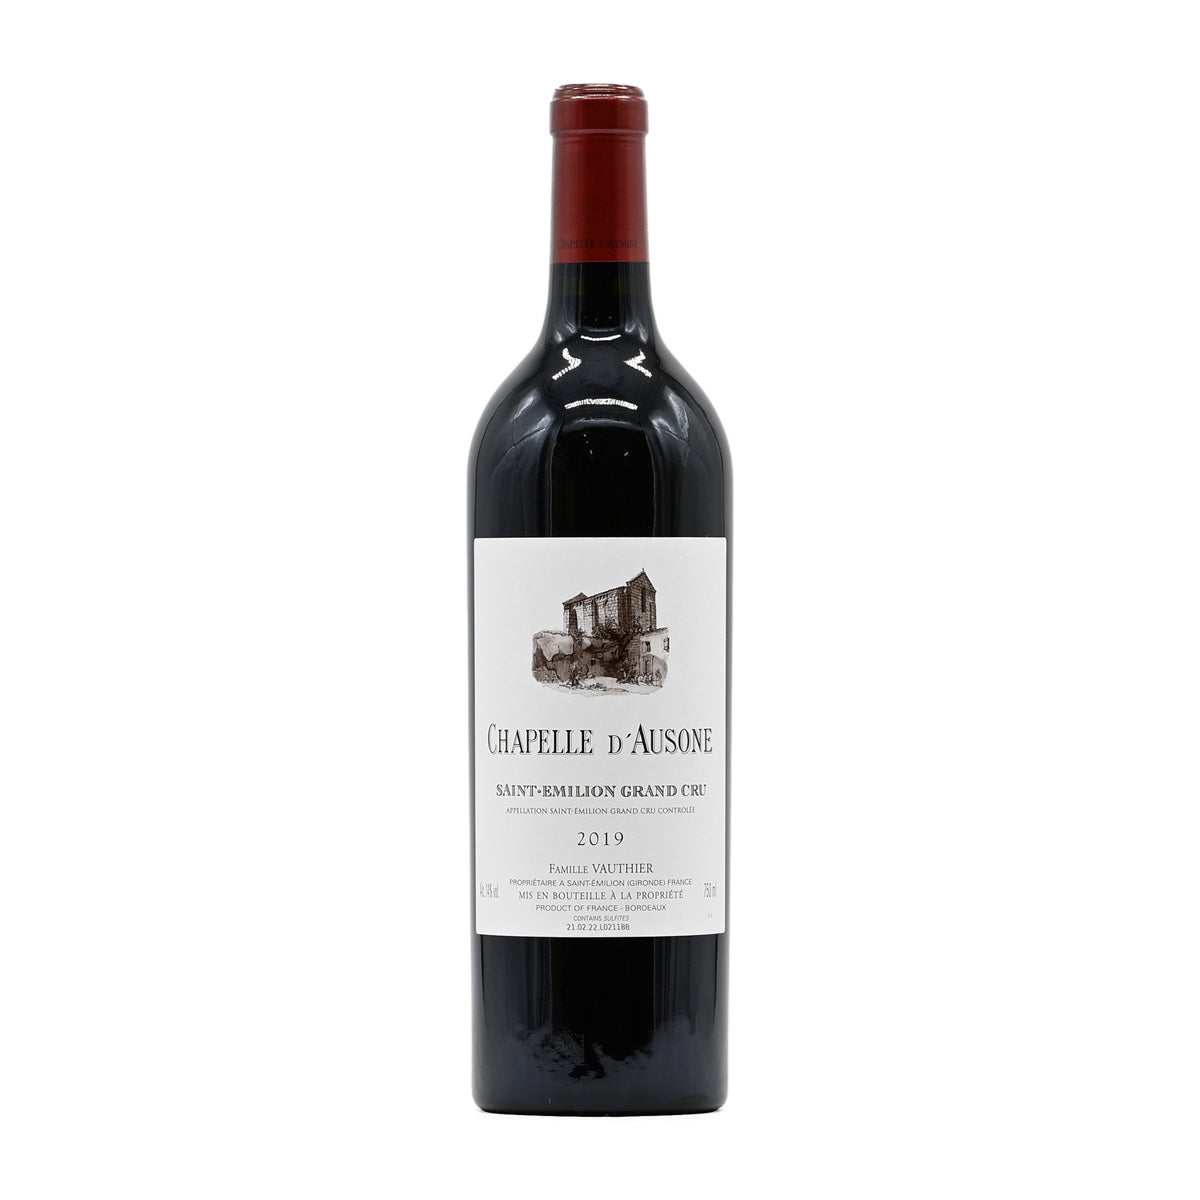 Chapelle d'Ausone 2019, 750ml French red wine, from Saint-Emilion Grand Cru, Bordeaux, France – GDV Fine Wines, Hong Kong